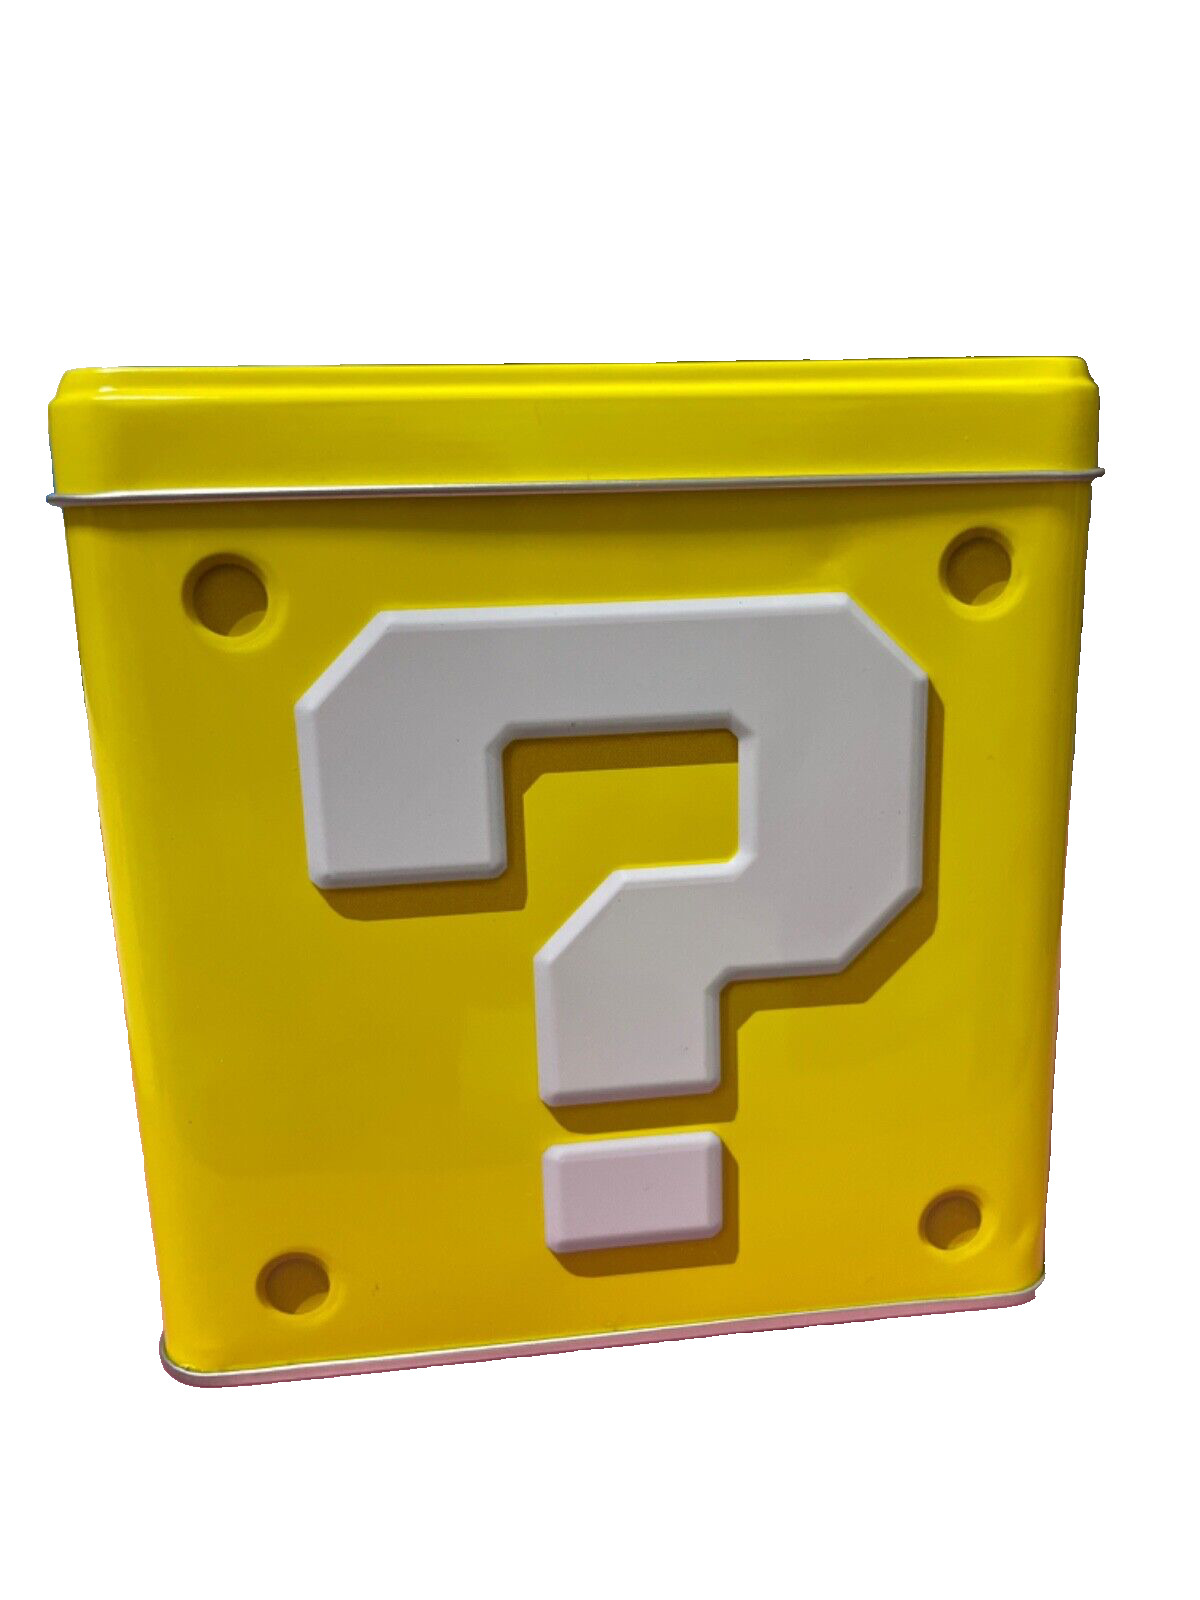 Universal Studios Japan  Super Nintendo World Question Box, empty can